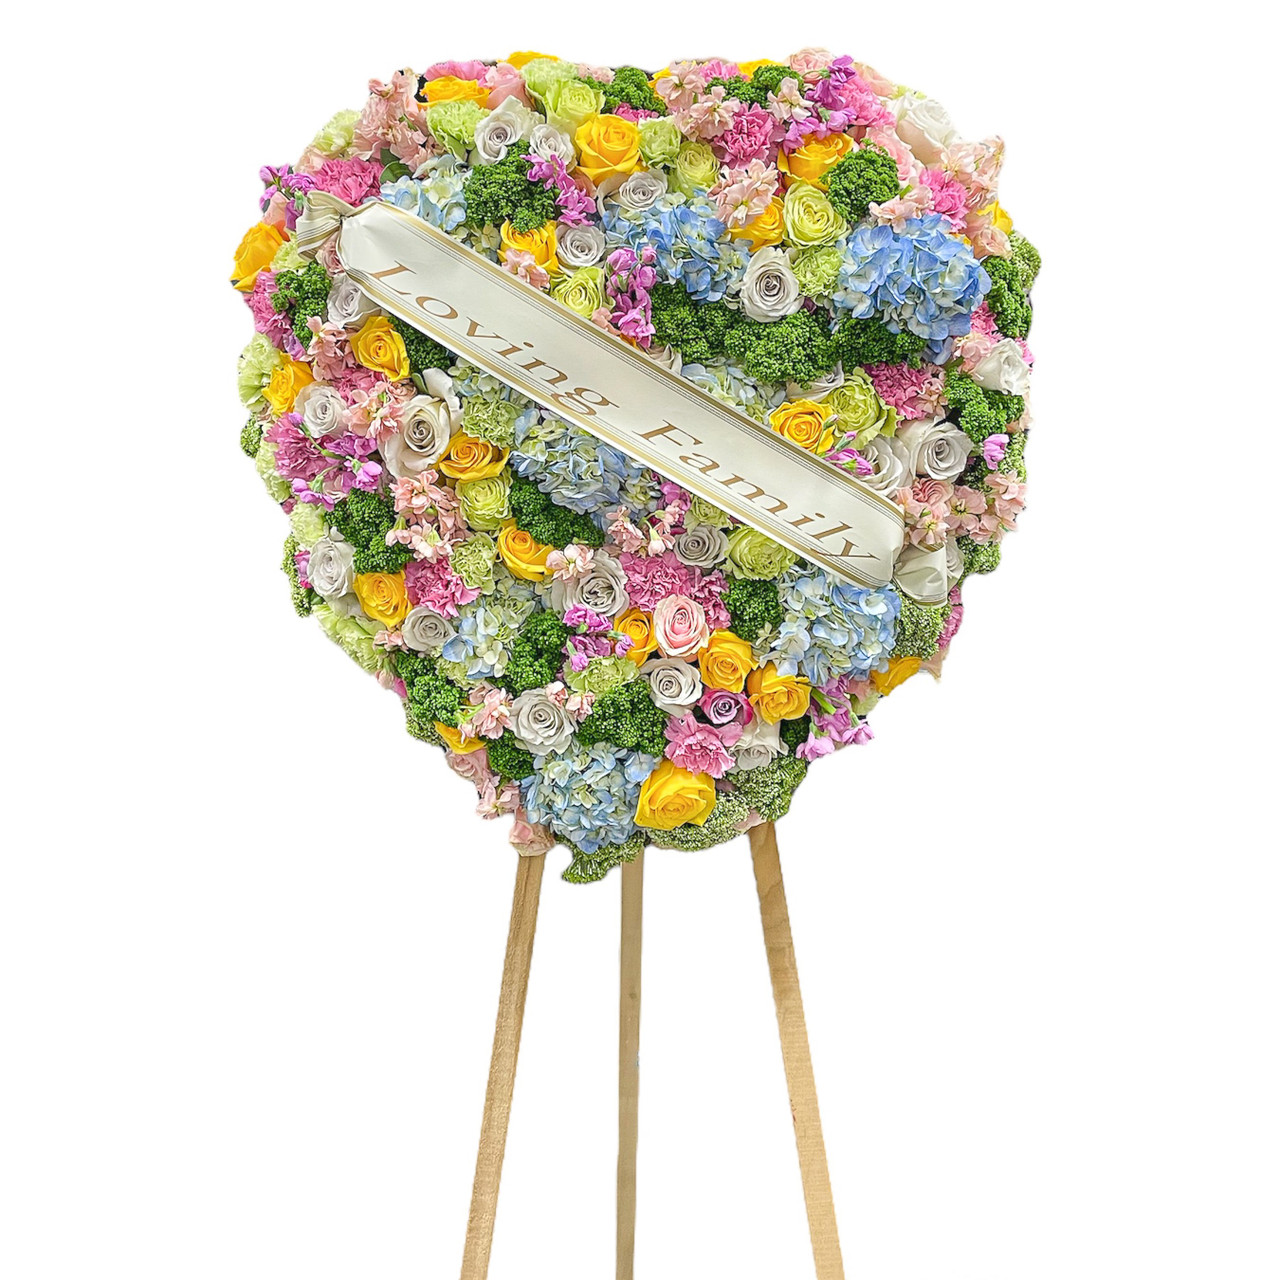 Unique Funeral Flower Arrangements for Your Beloved